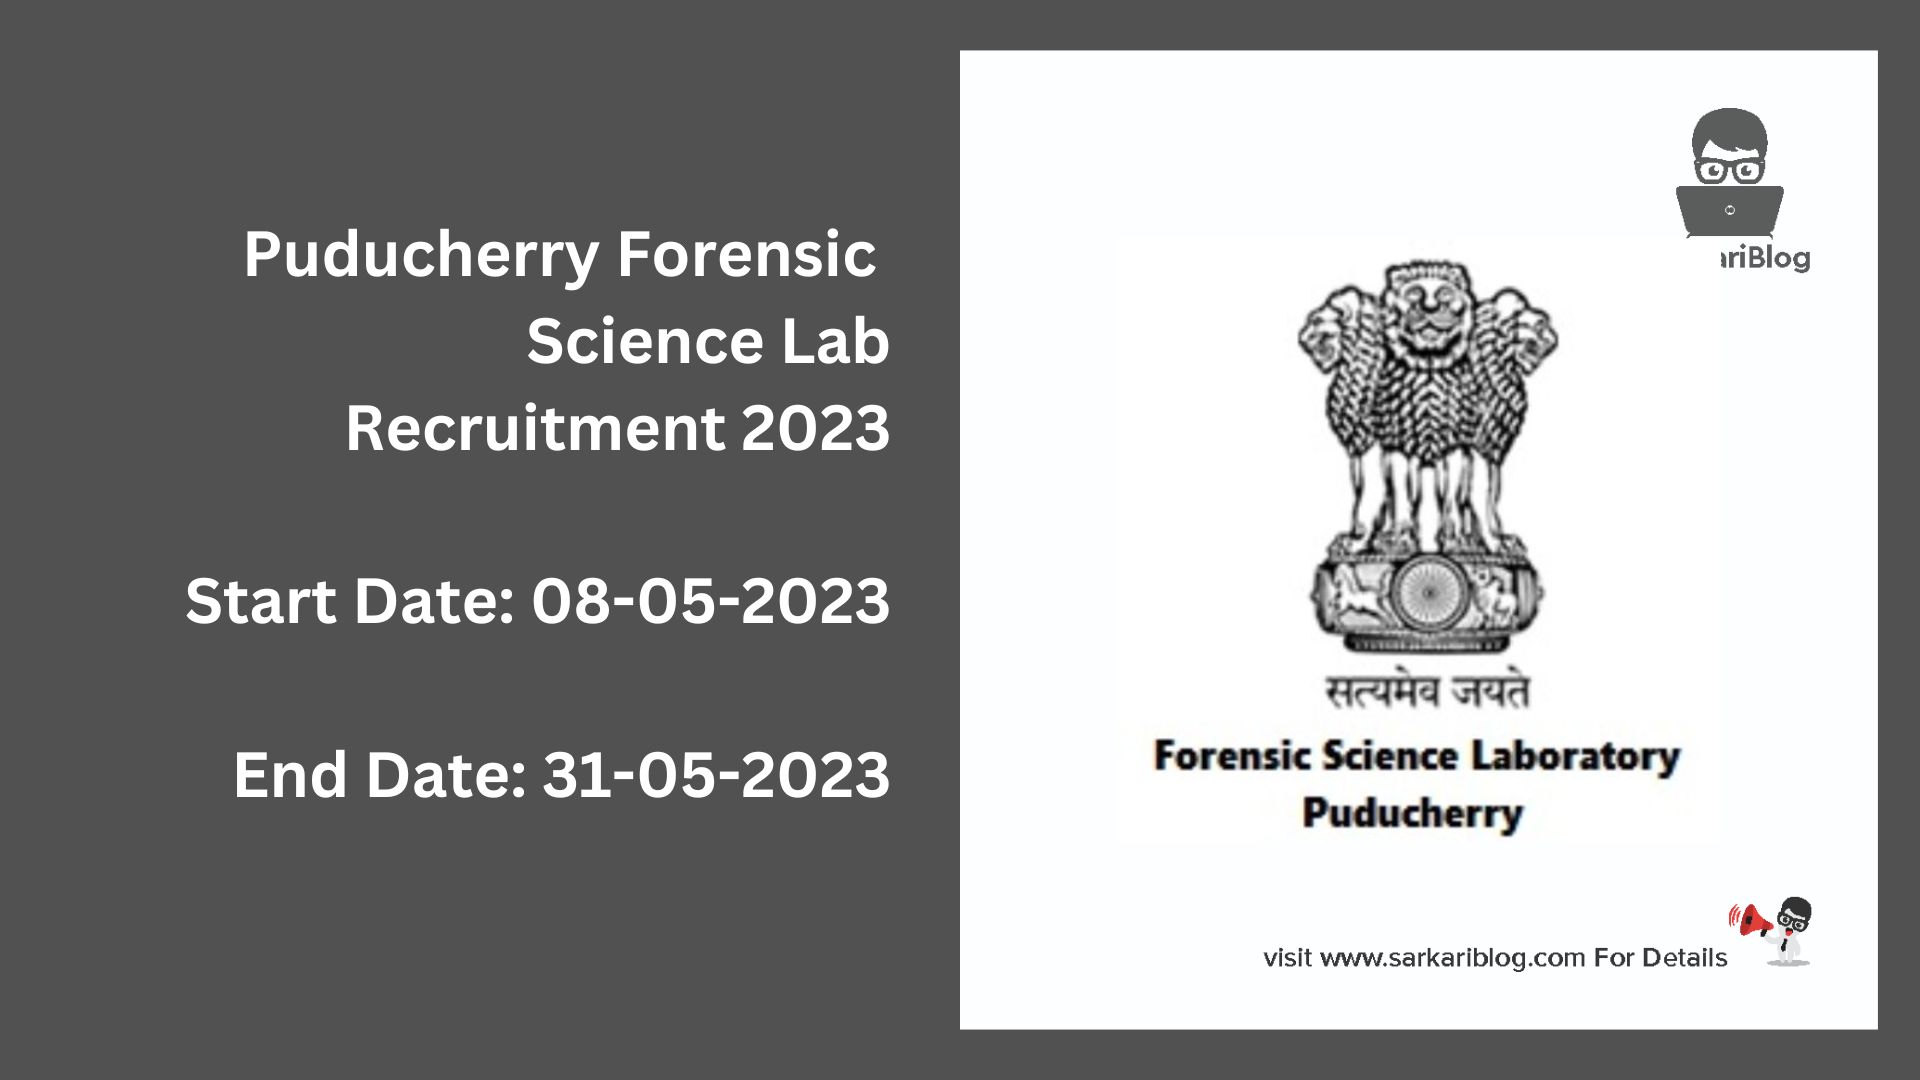 Puducherry Forensic Science Recruitment 2023